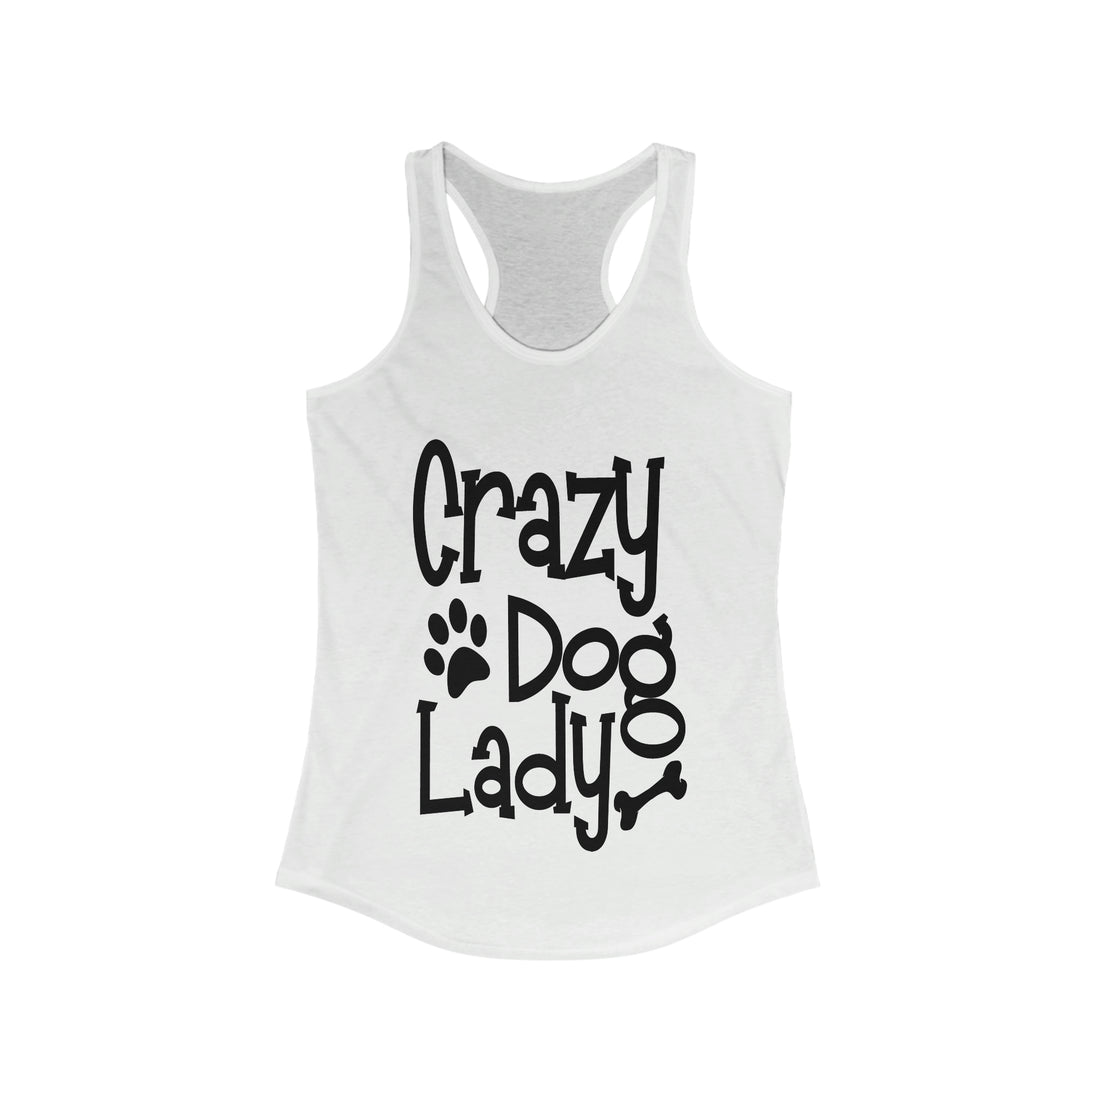 Crazy Dog Lady - Racerback Tank Top